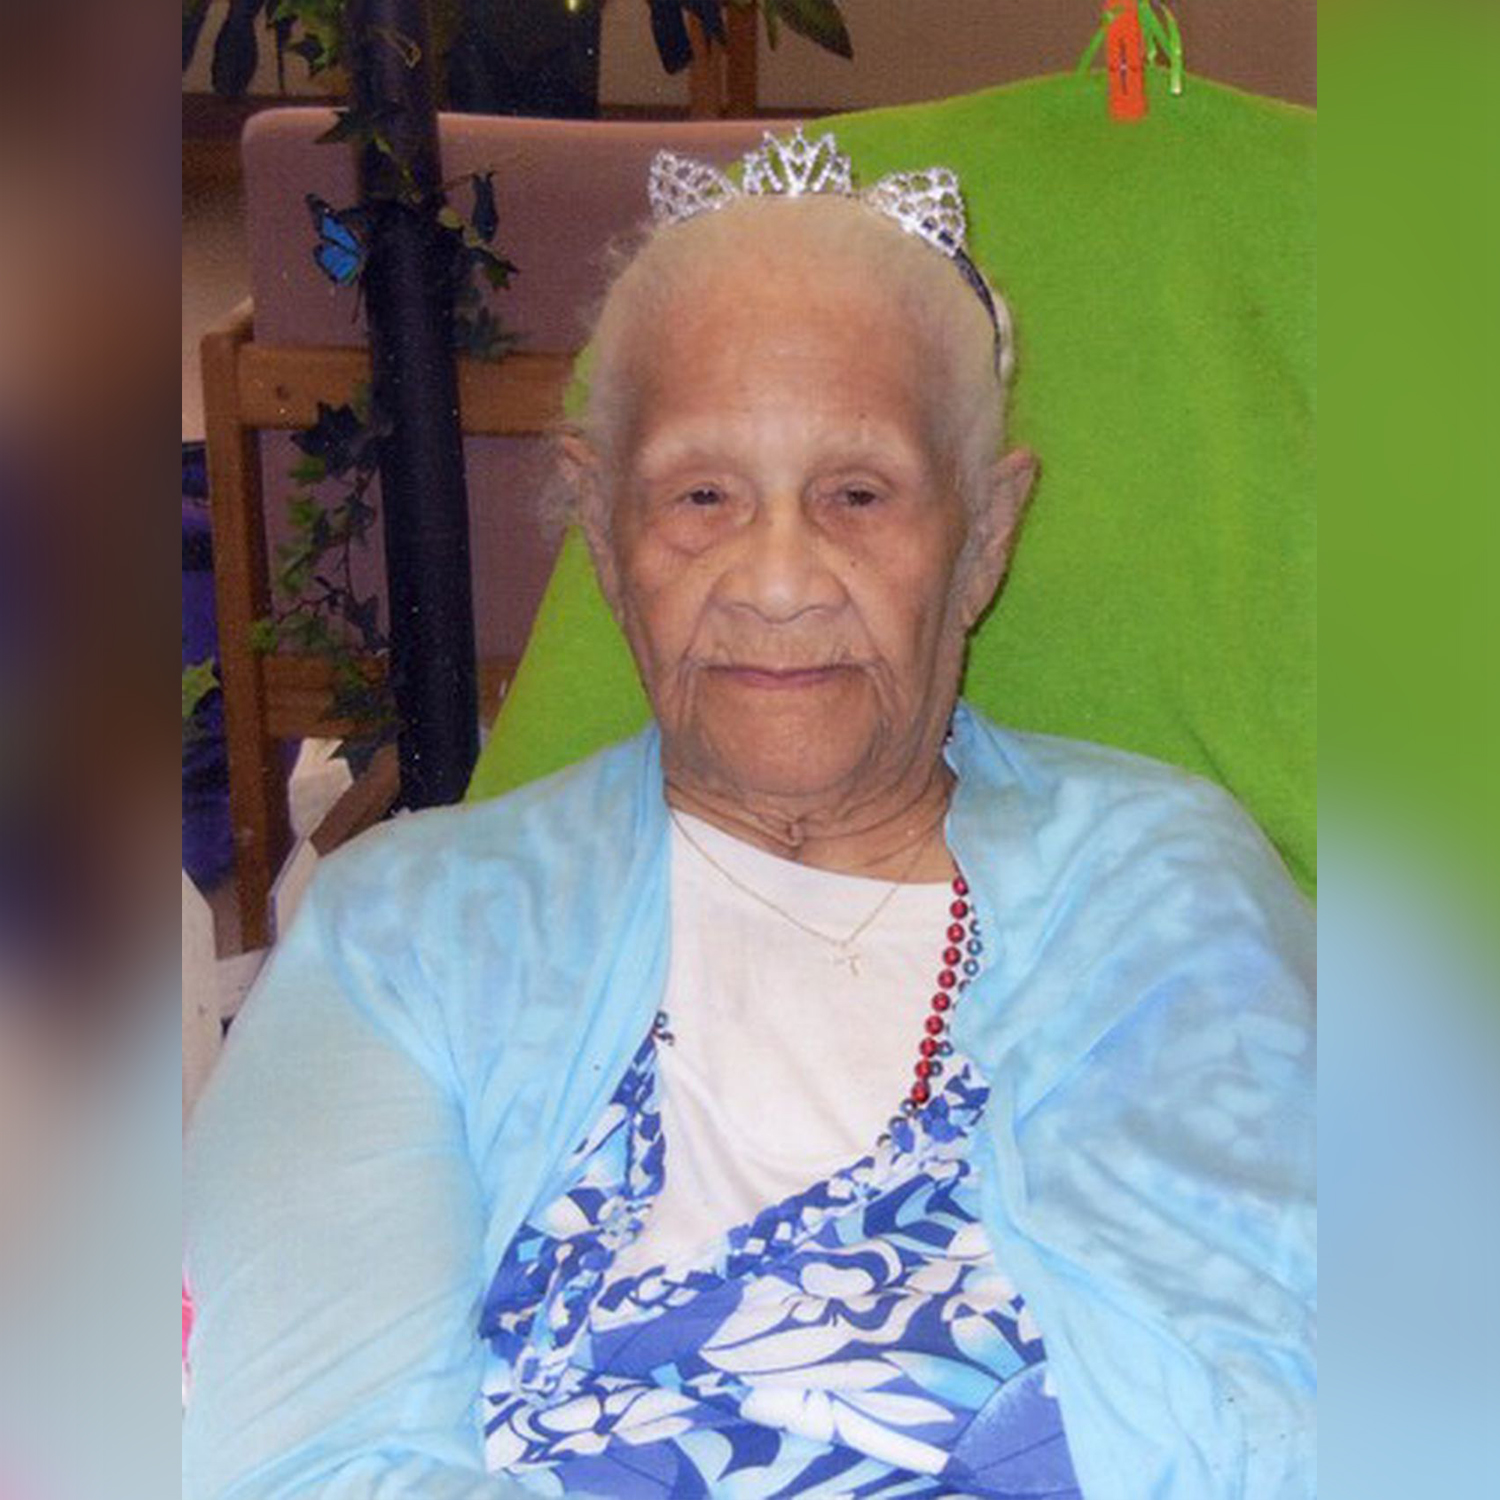 On her 106th birthday. (Source: NJ.com)